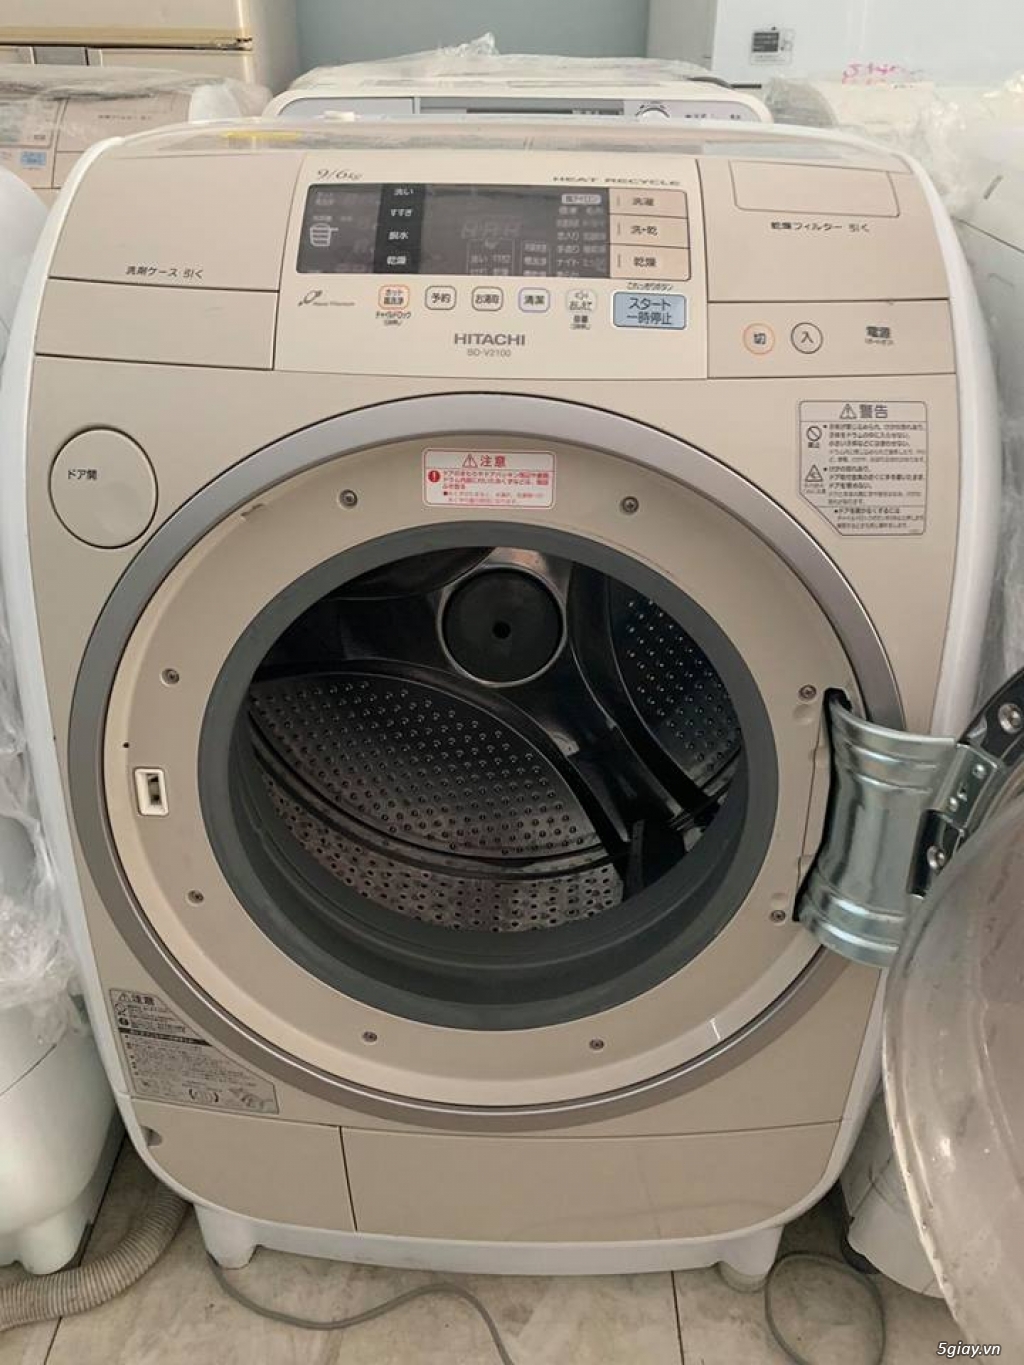 Máy giặt Panasonic, National, Toshiba kết hợp máy sấy - 1